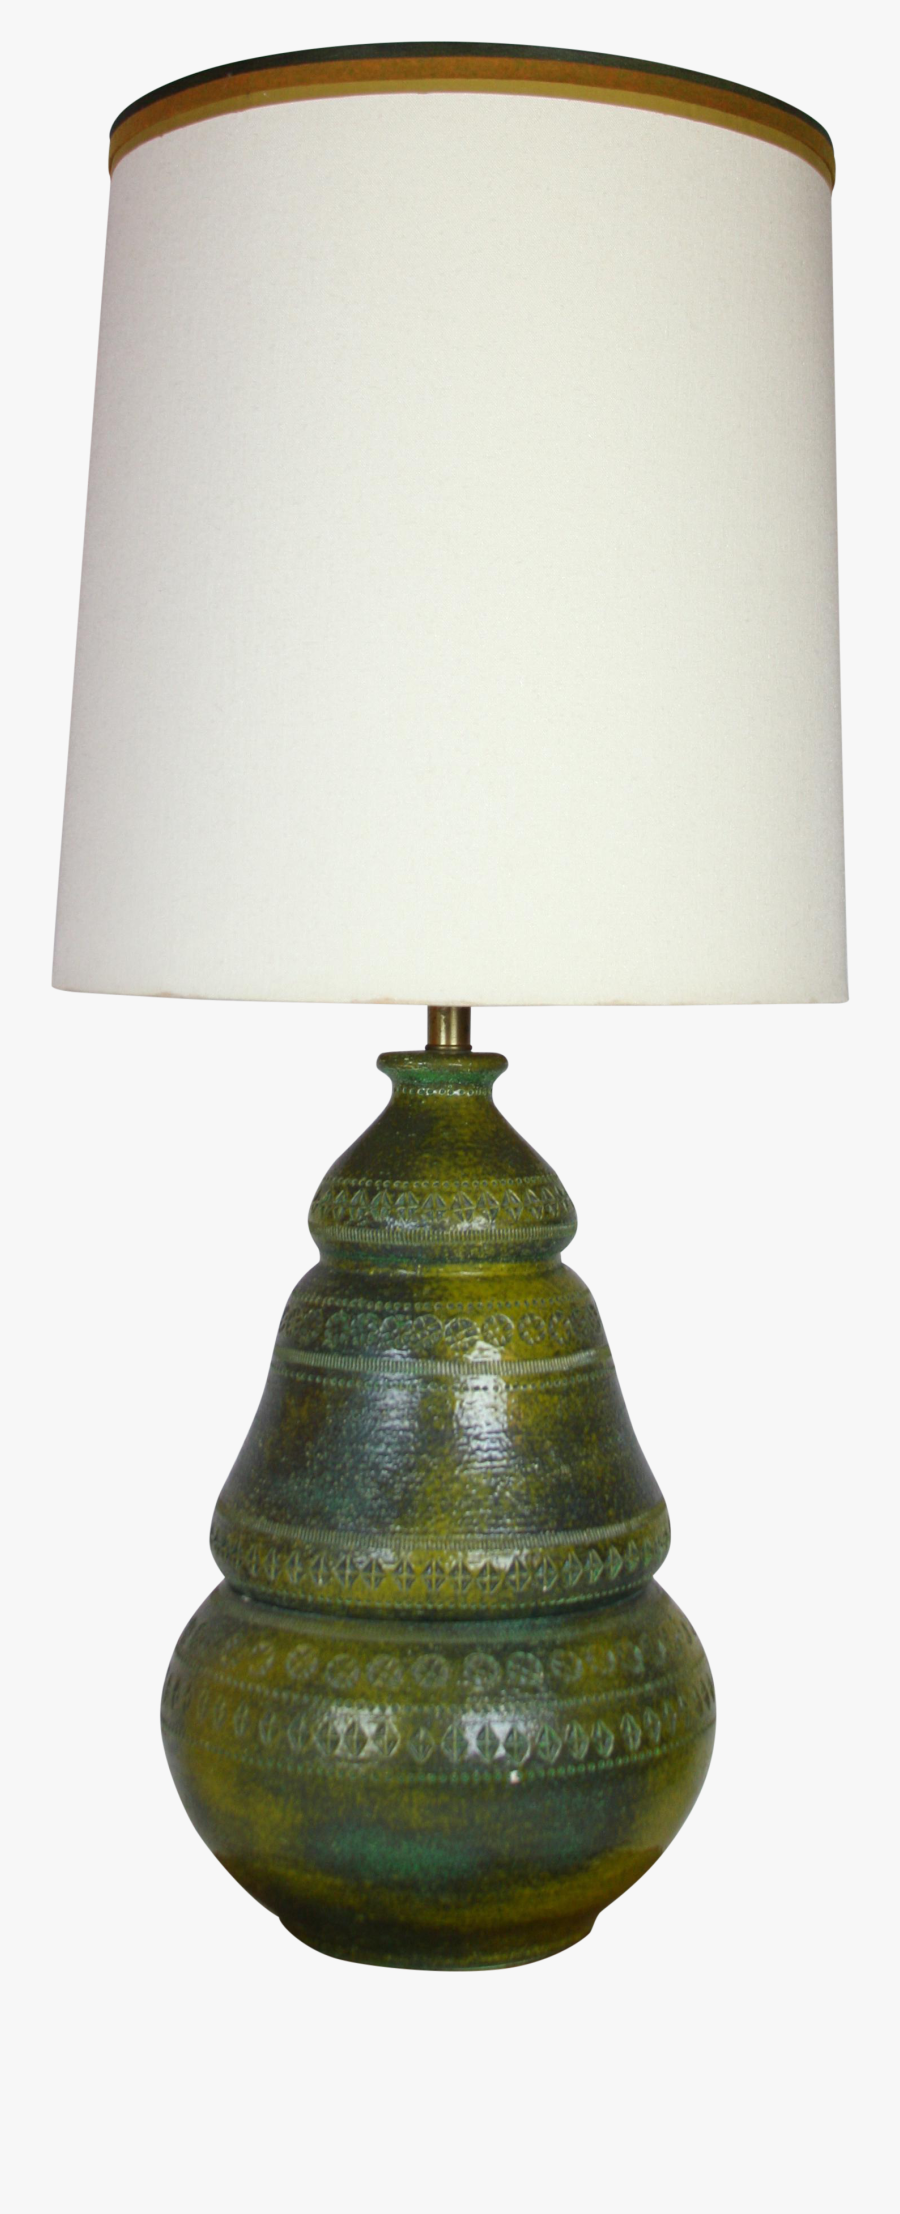 Ceramic Lamp Png Clipart - Lampshade, Transparent Clipart